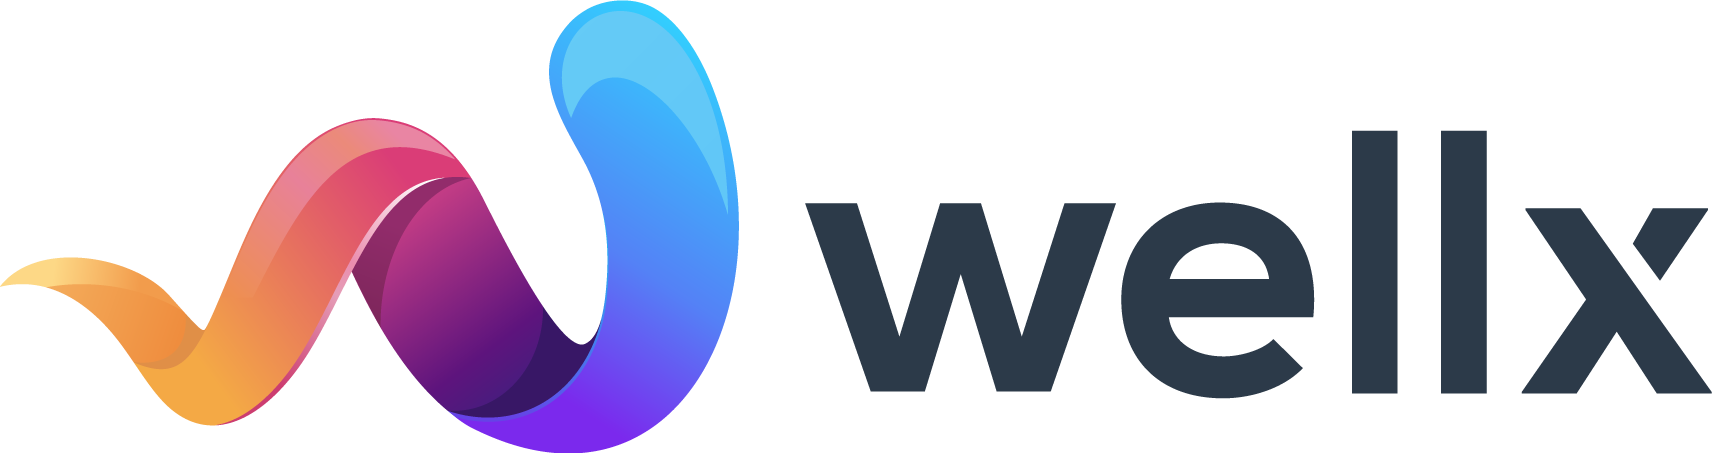 Wellxai Technologies Ltd